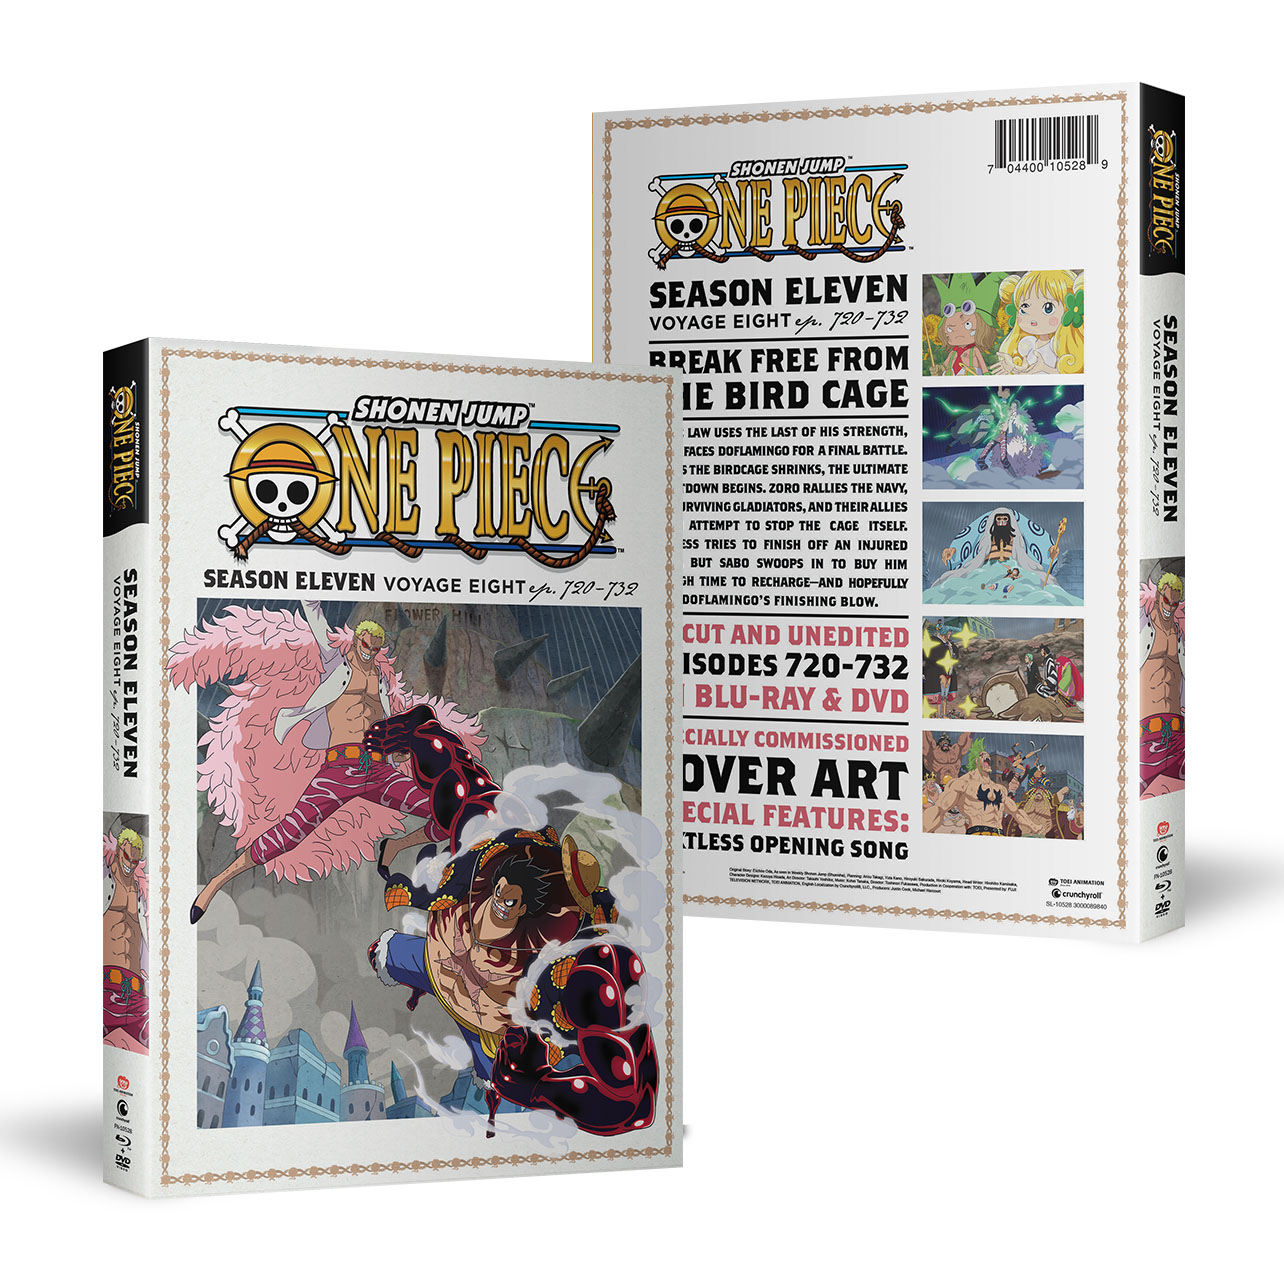 One Piece Season 11 Voyage 8 Blu-ray Box Art